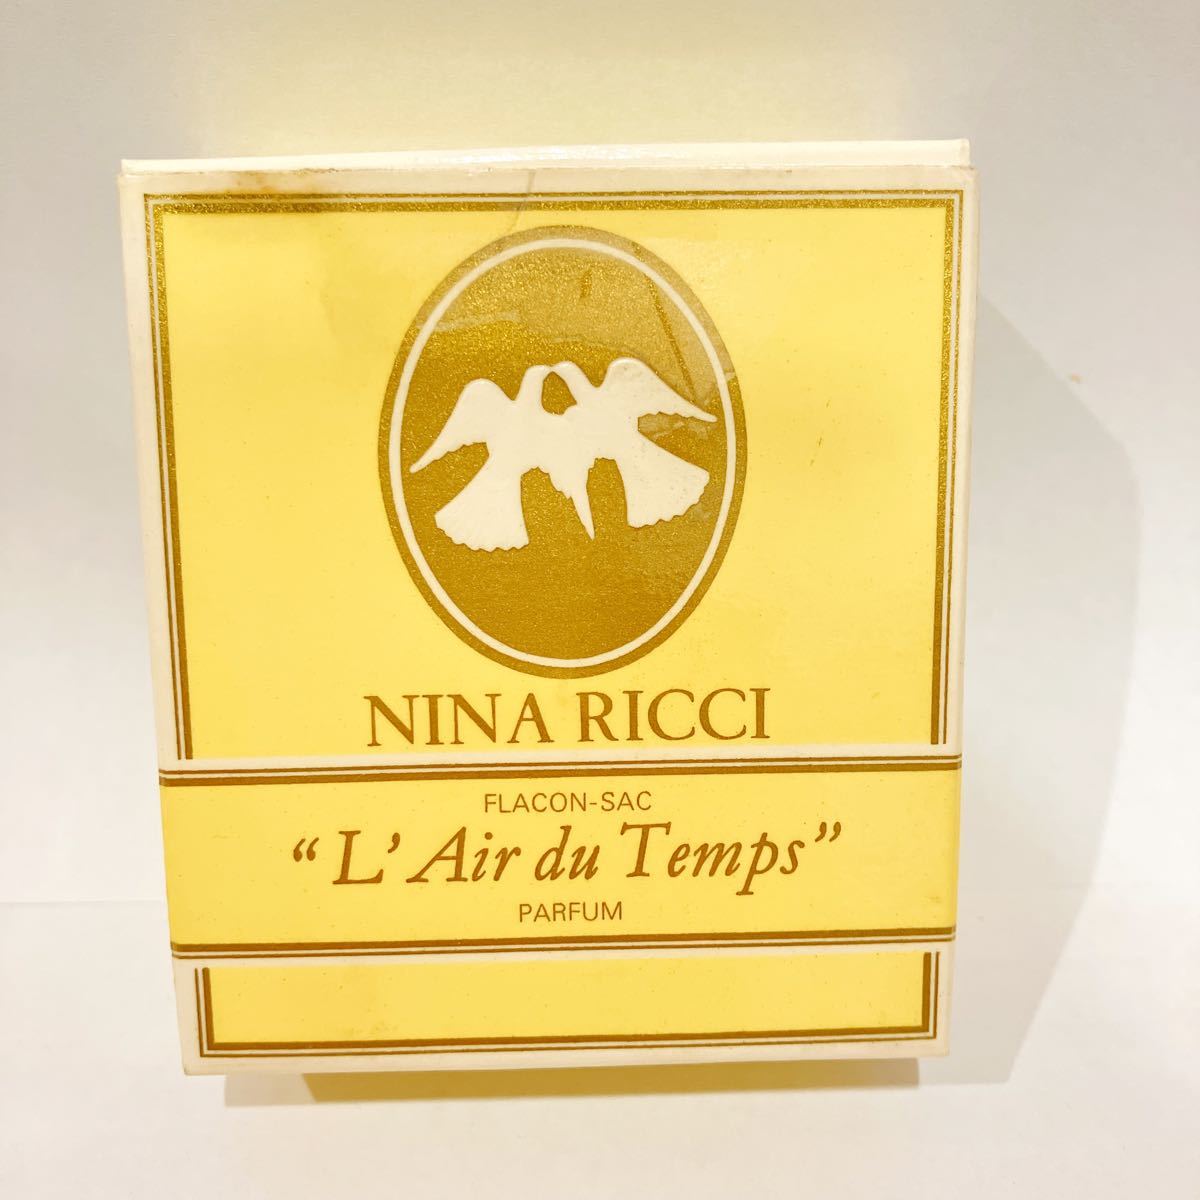 NINA RICCI “L’Air du Temps” 5g